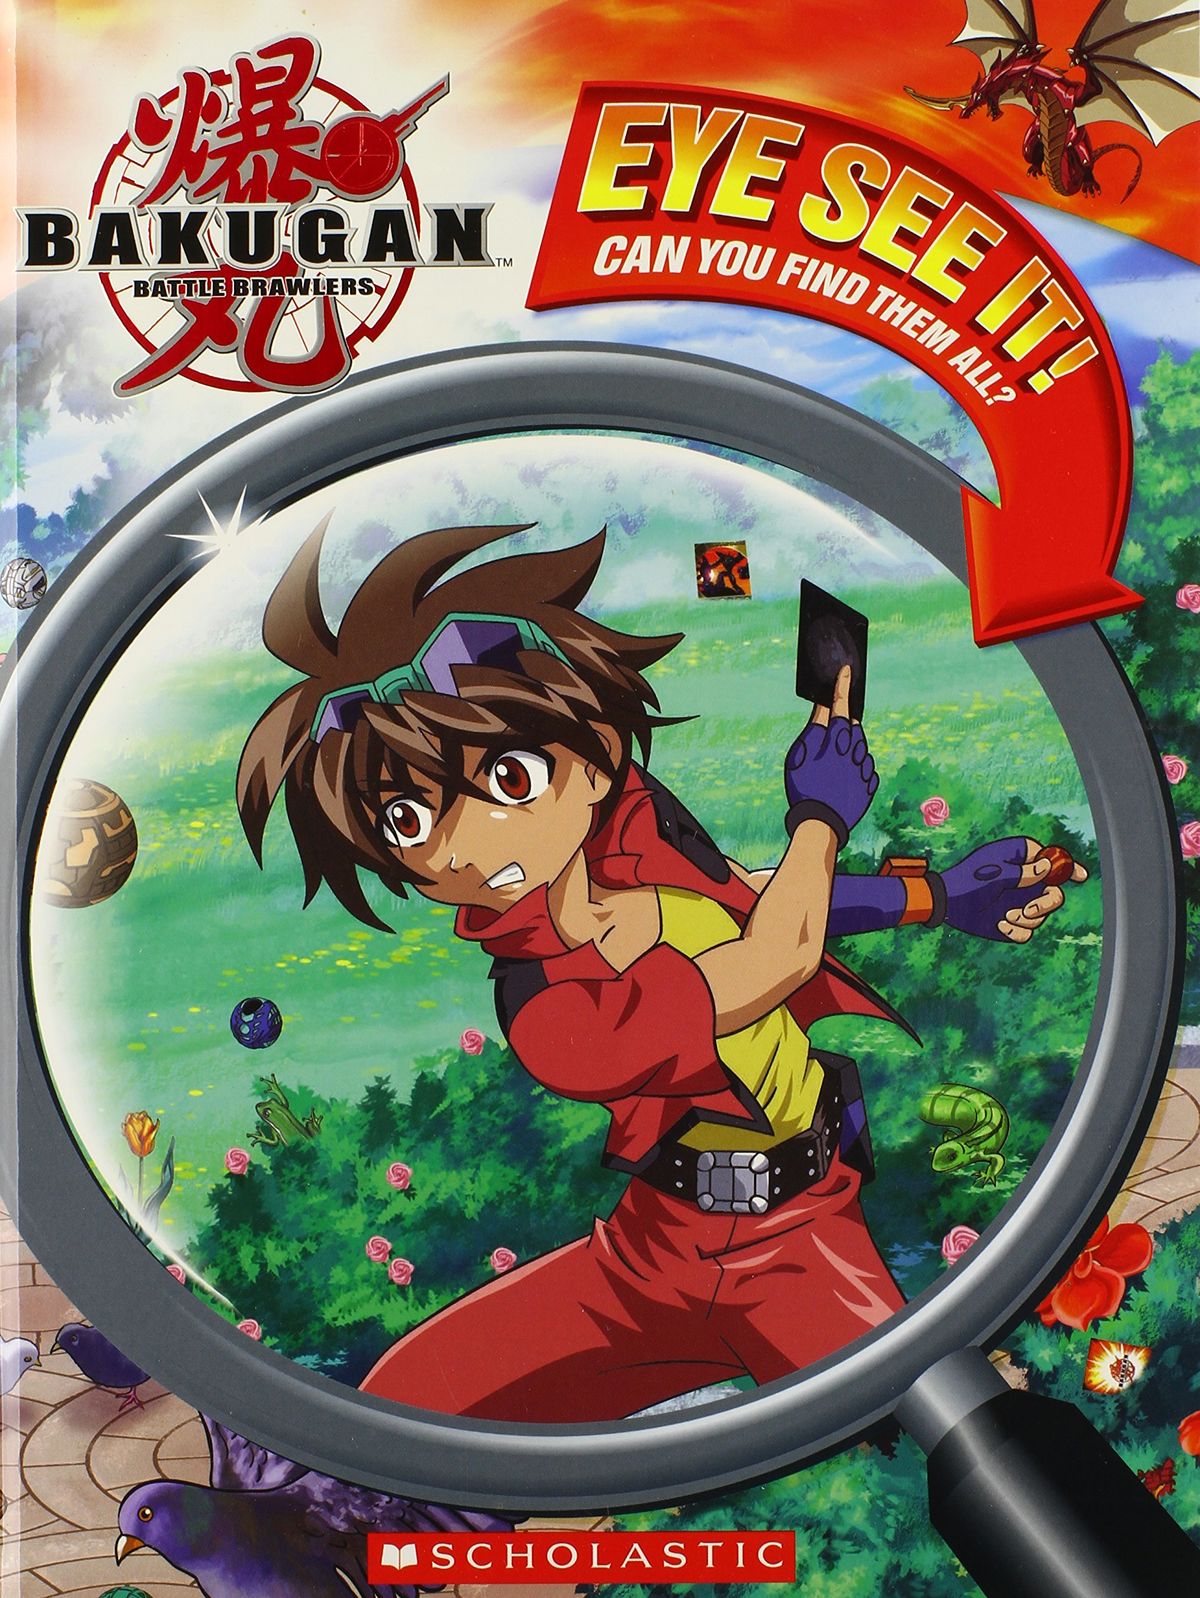 Eye See It! (Bakugan Battle Brawlers) - The Bakugan Wiki